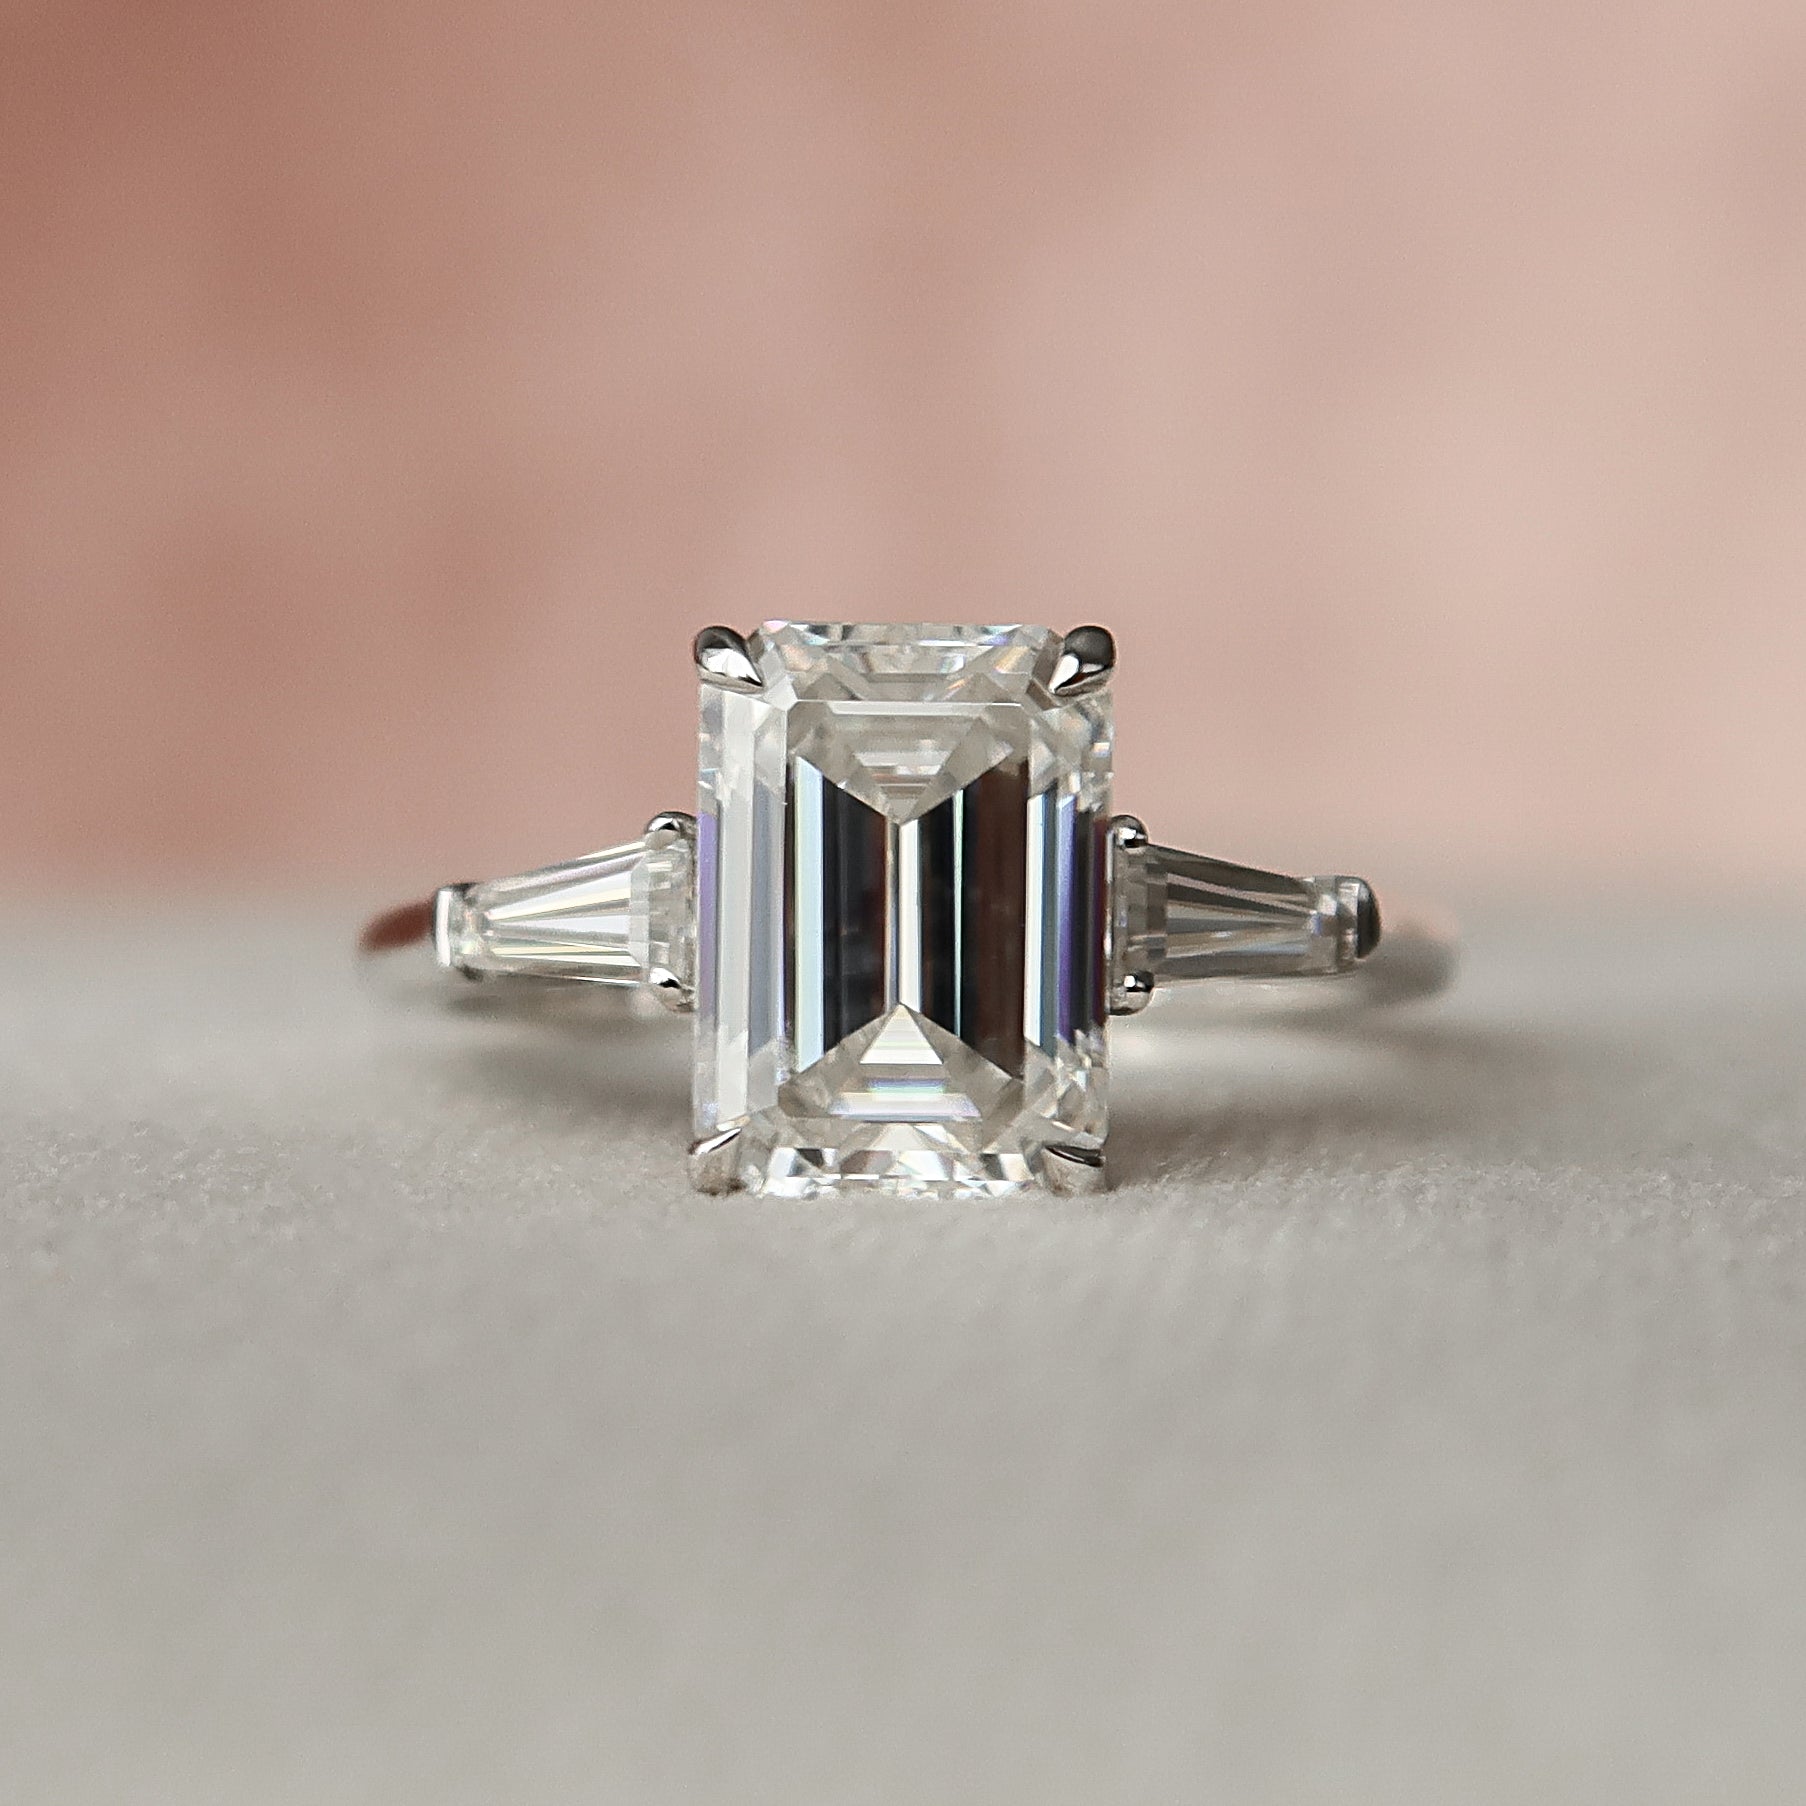 From Runway to Real Life: Nina Agdal's Engagement Ring